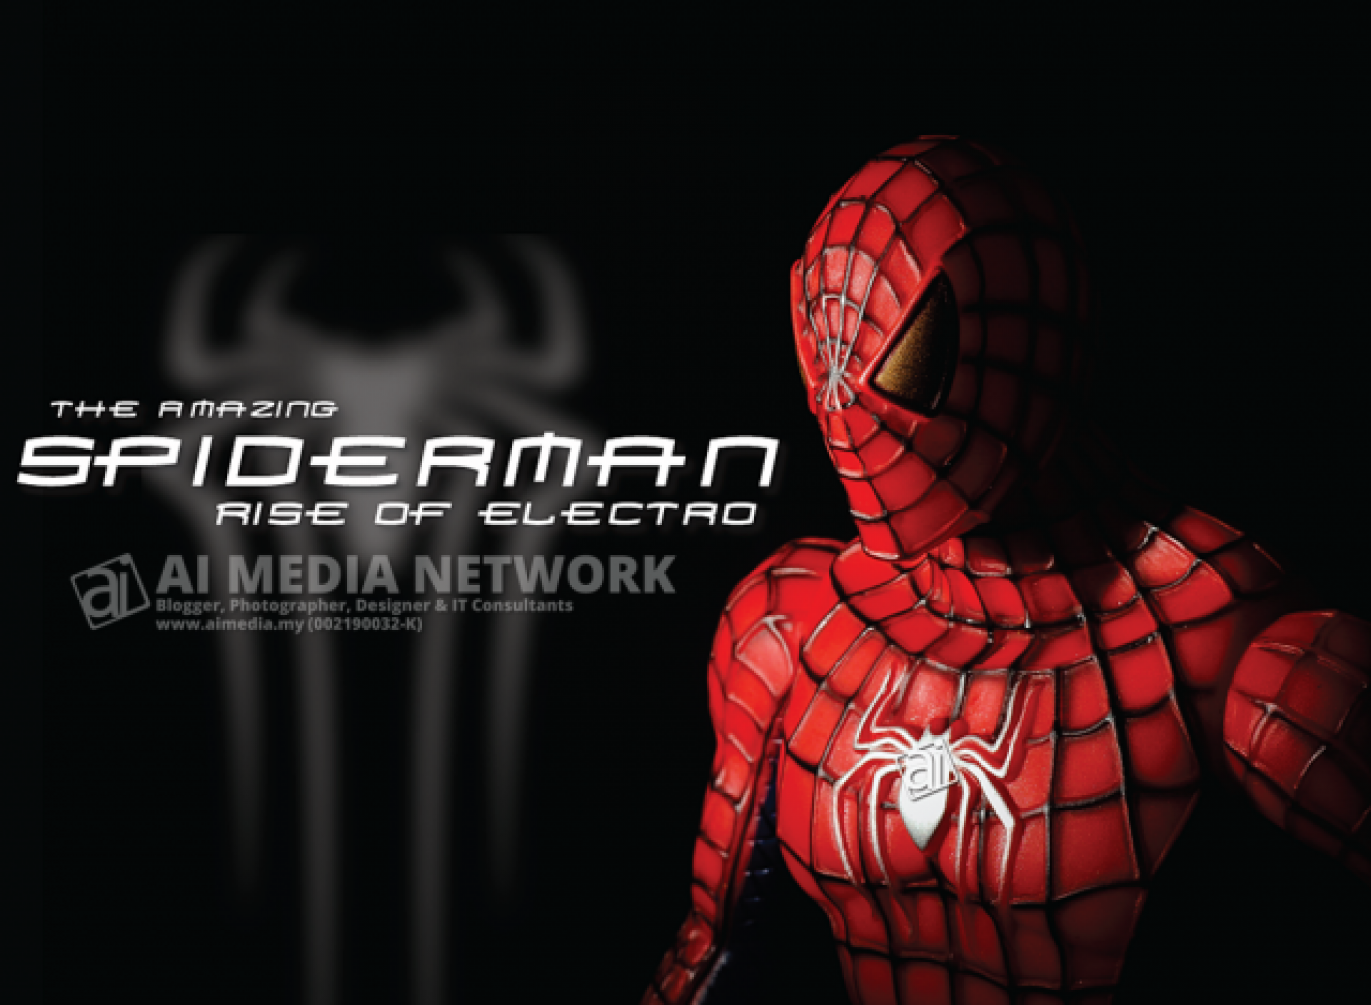 Spiderman Poster 2014 - Potia kata... boleh hantar invoice kat Marvel... hahaha Eh? Marvel ke Capcom?